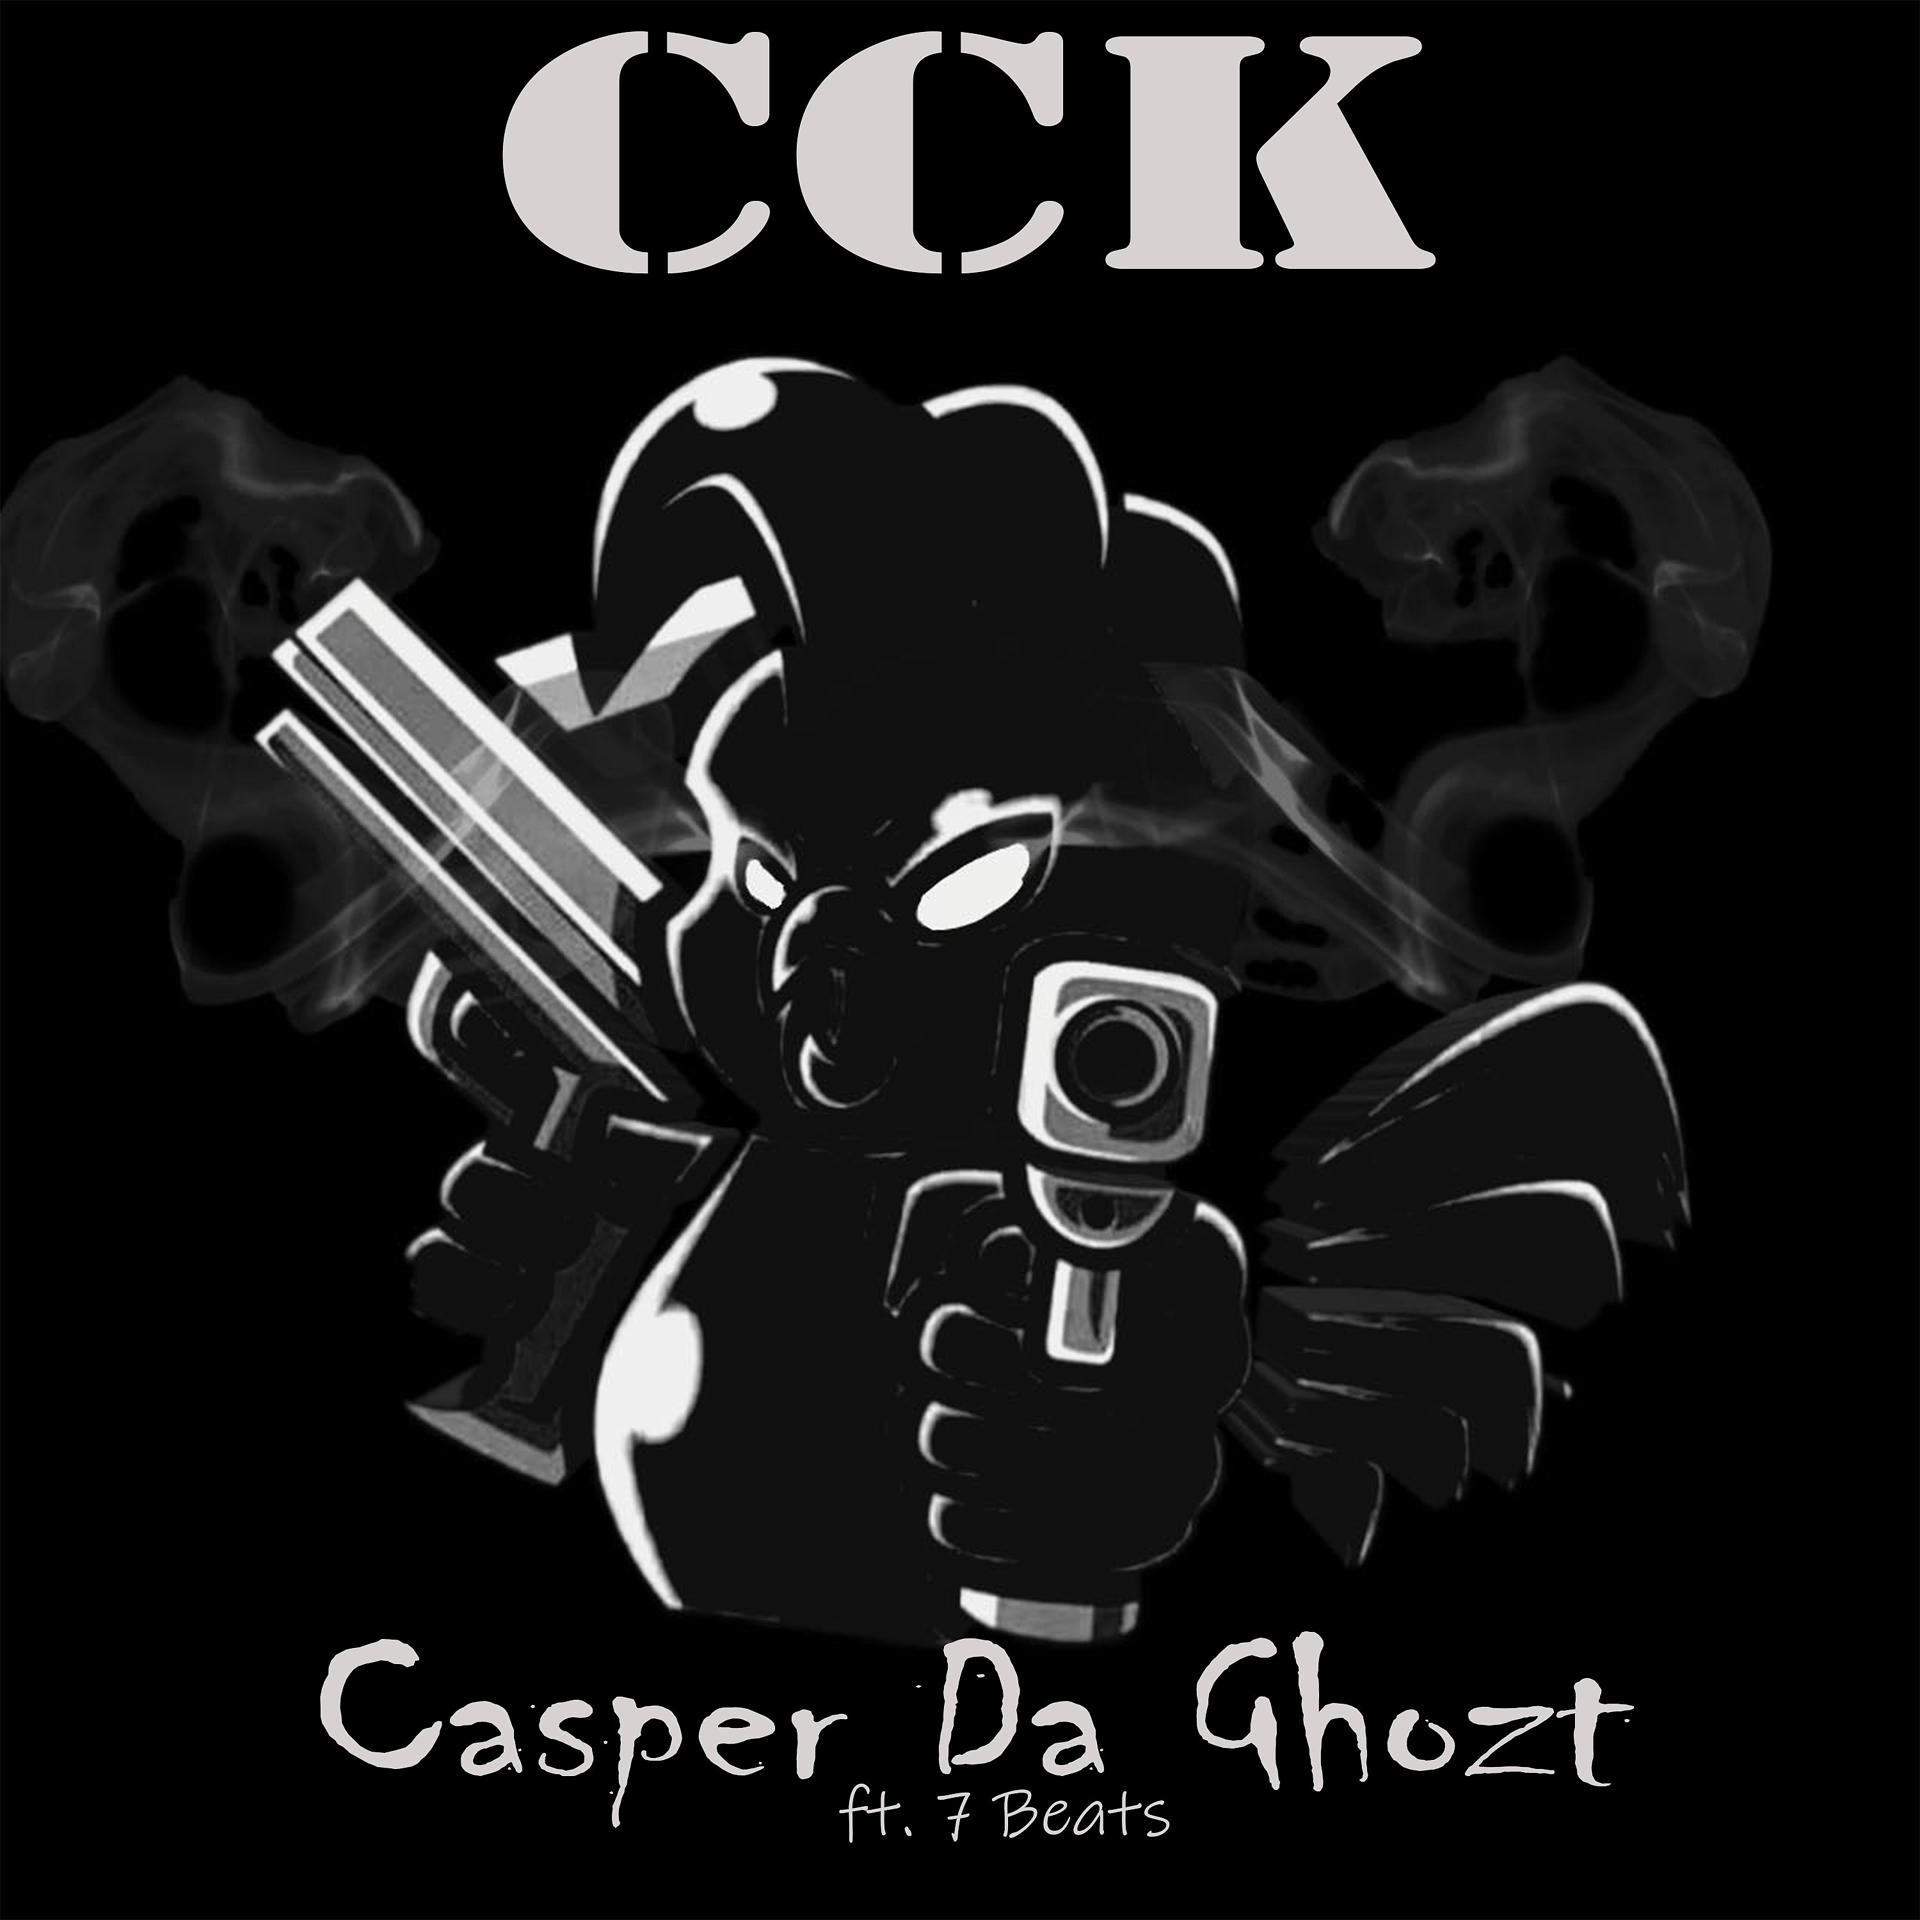 Постер альбома Cck